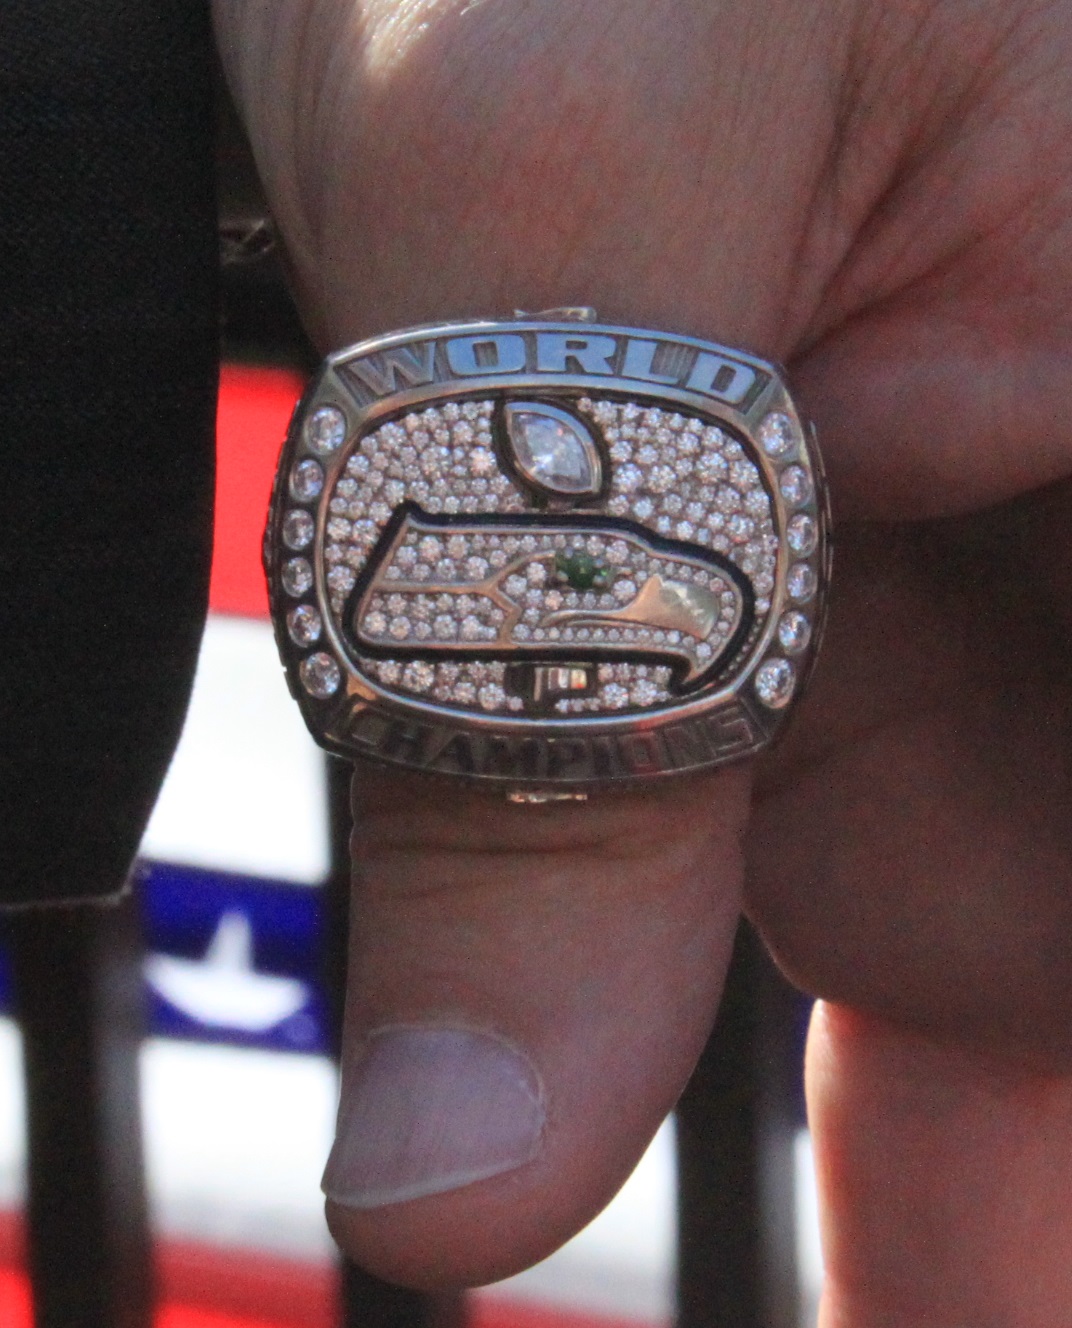 File:Seahawks Championship Ring.jpg - Wikipedia